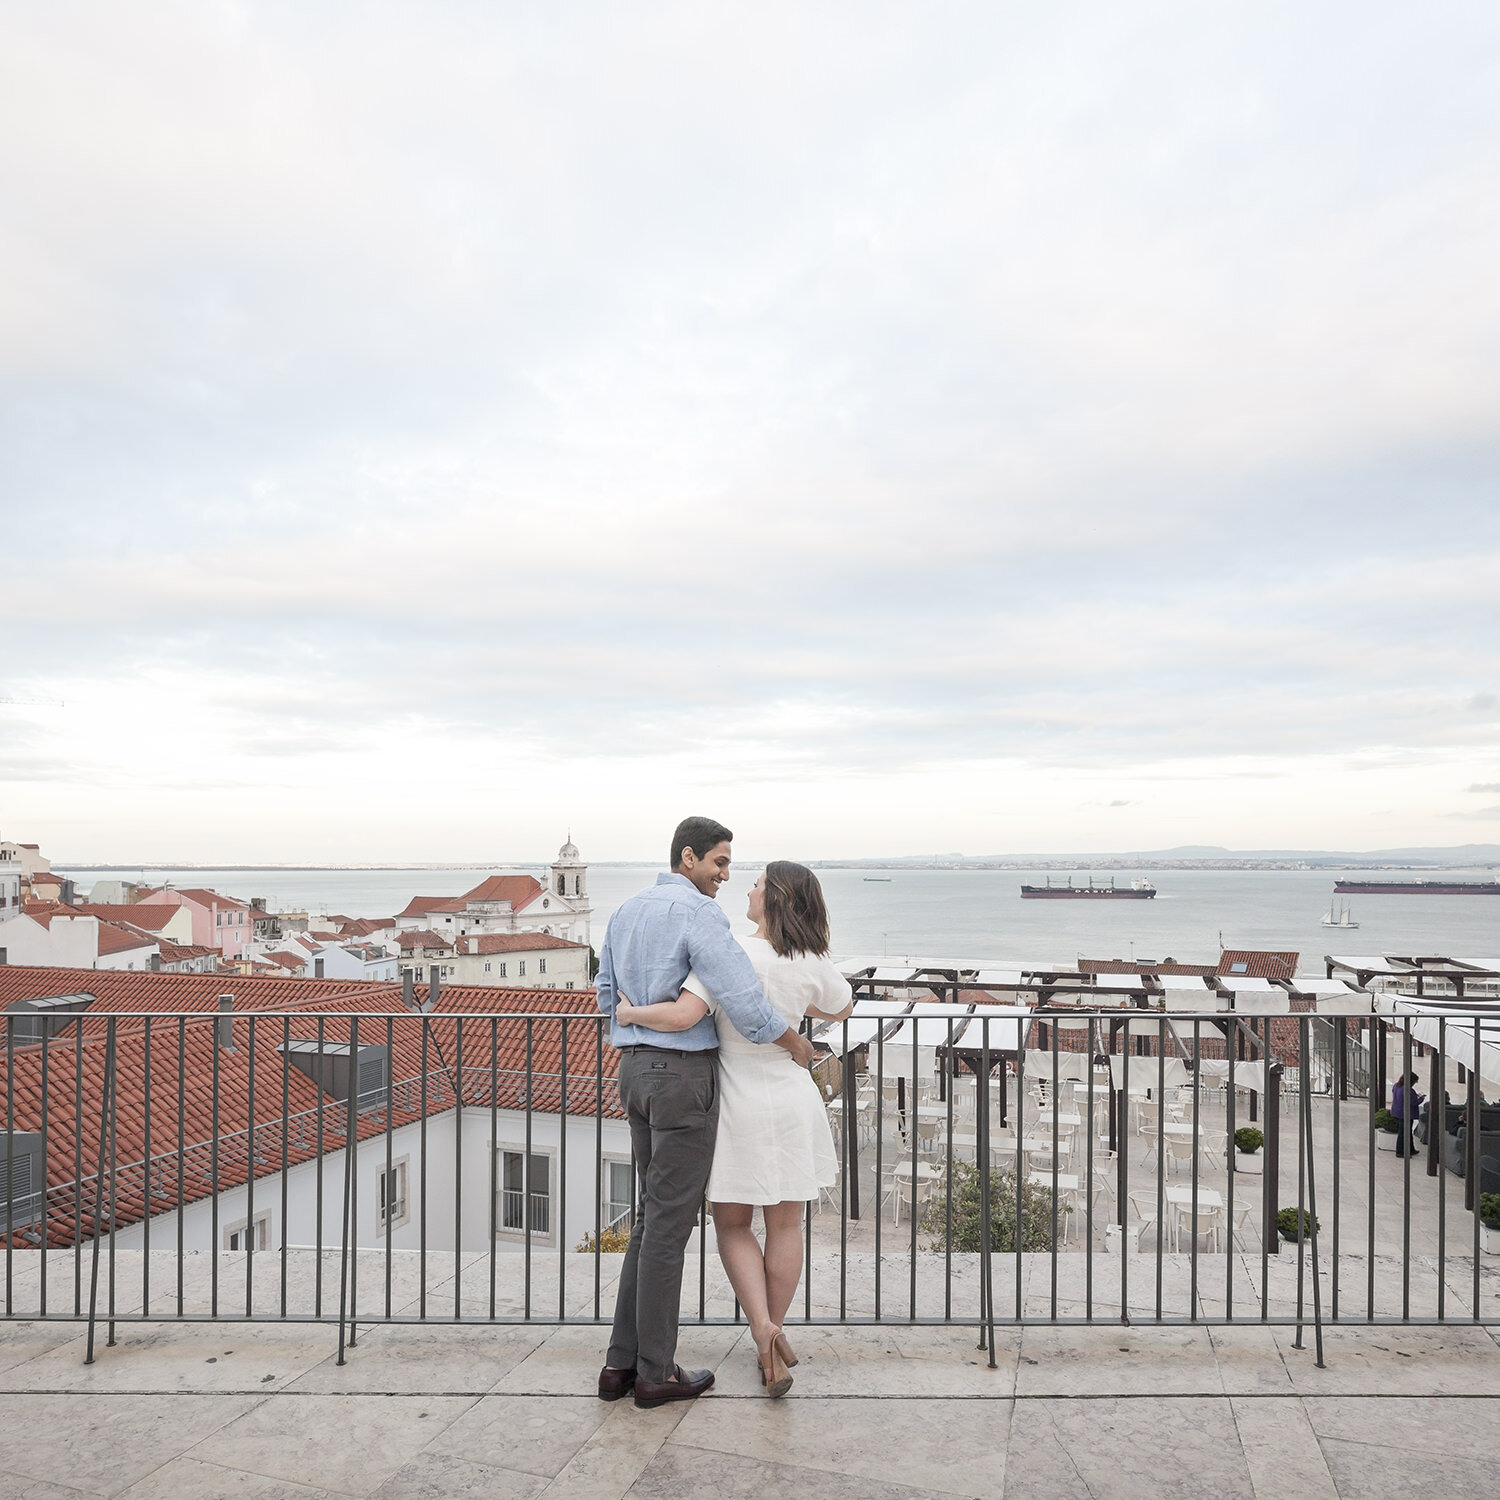 surprise-wedding-proposal-photographer-lisbon-ana-lucia-da-cruz-terra-fotografia-flytographer-53.jpg